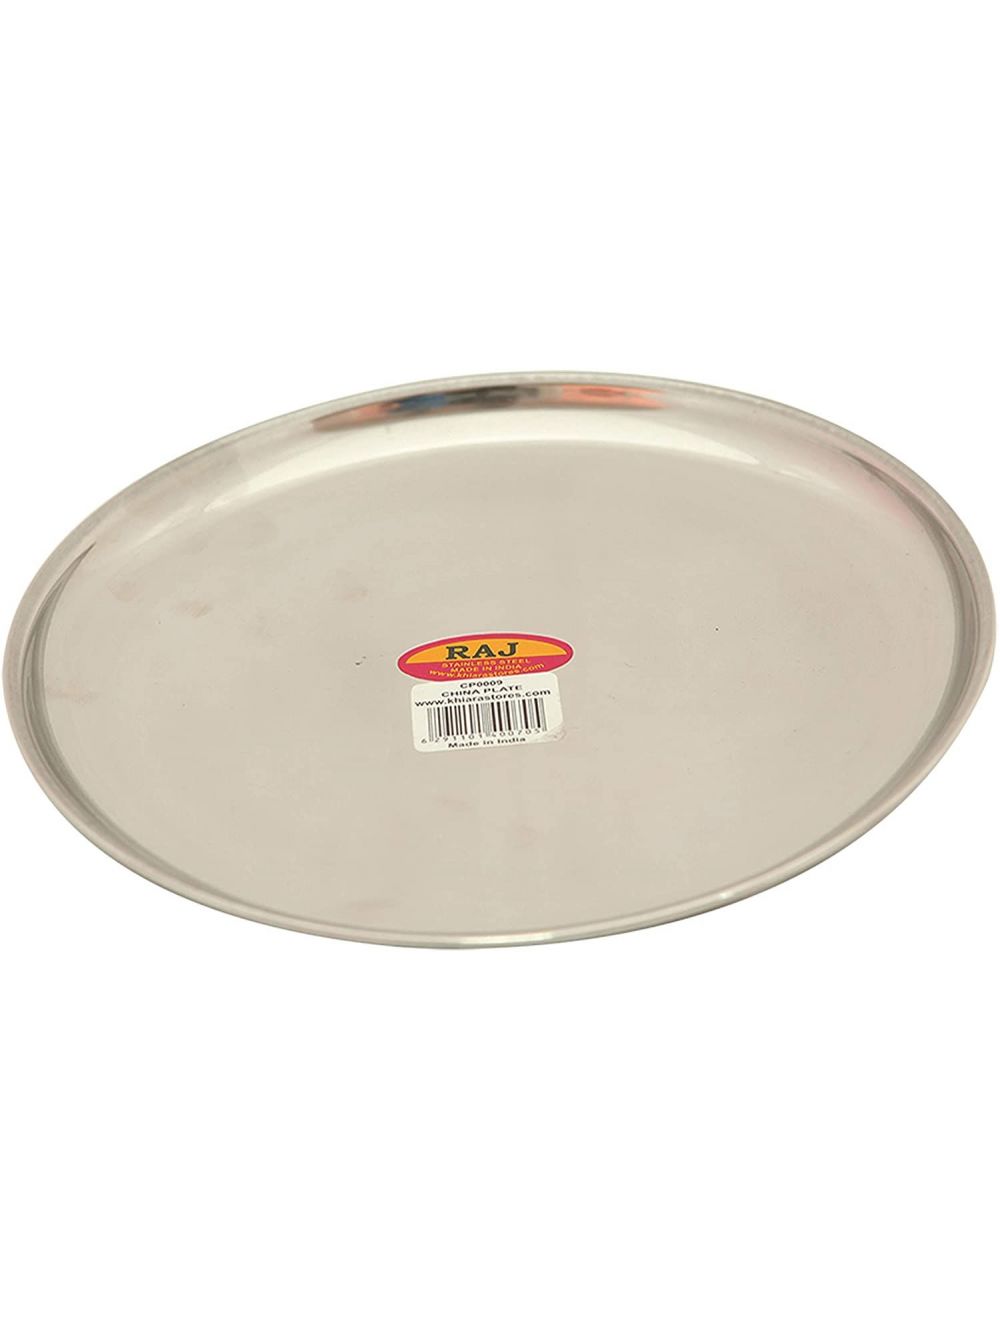 Raj Steel Plate 13, Silver, 31 cm, CP0013